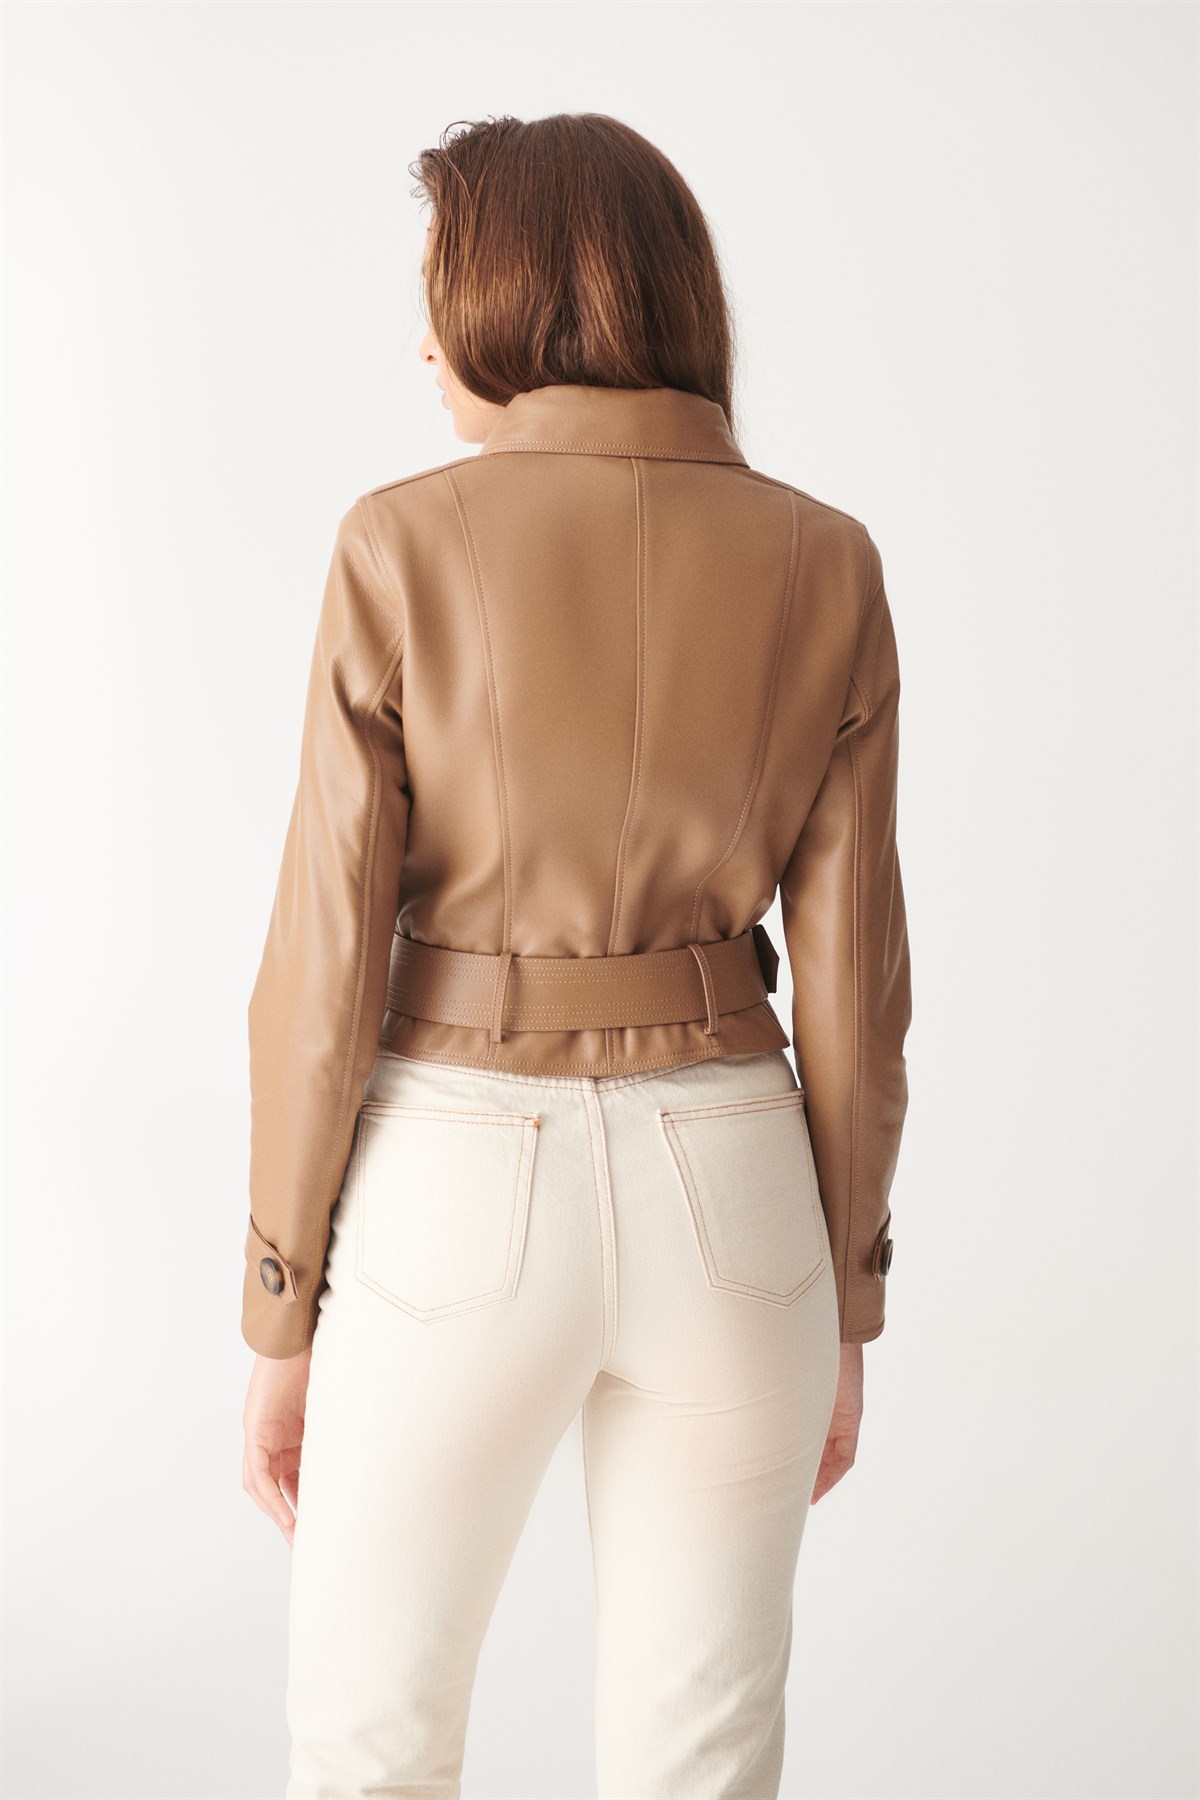 AMARA Light Brown Sport Leather Jacket | Women's Leather Jacket Models